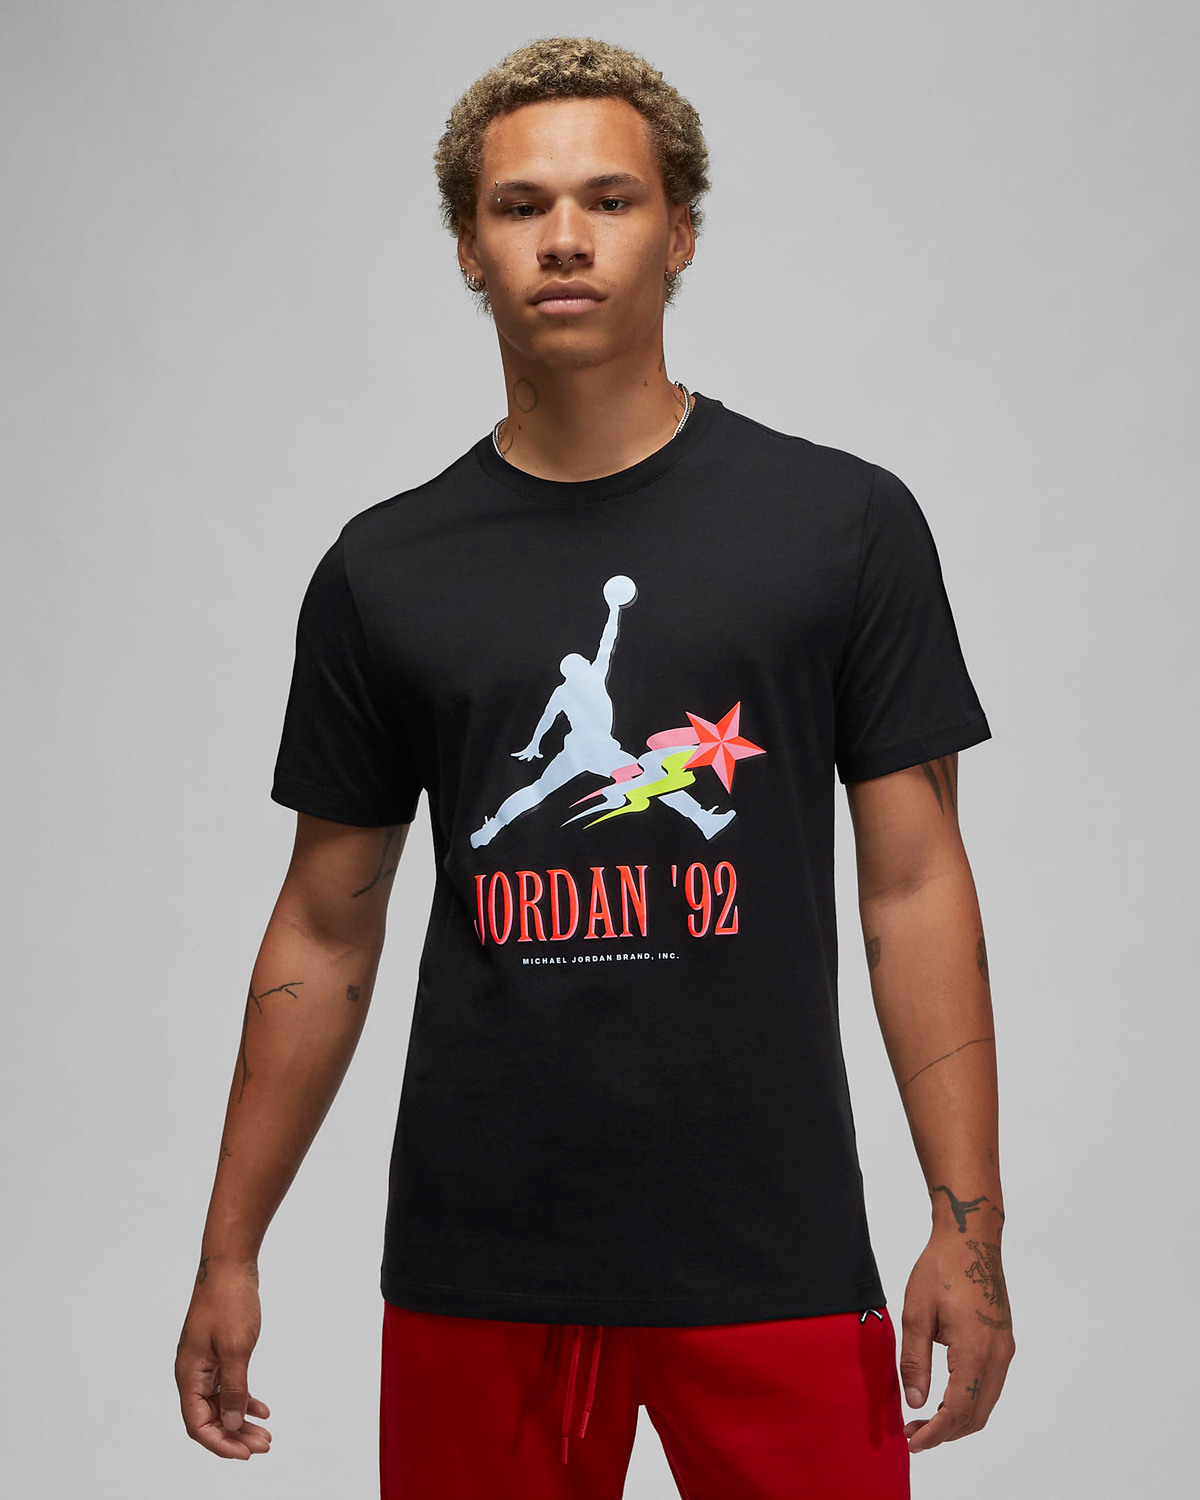 Jordan-92-T-Shirt-Black